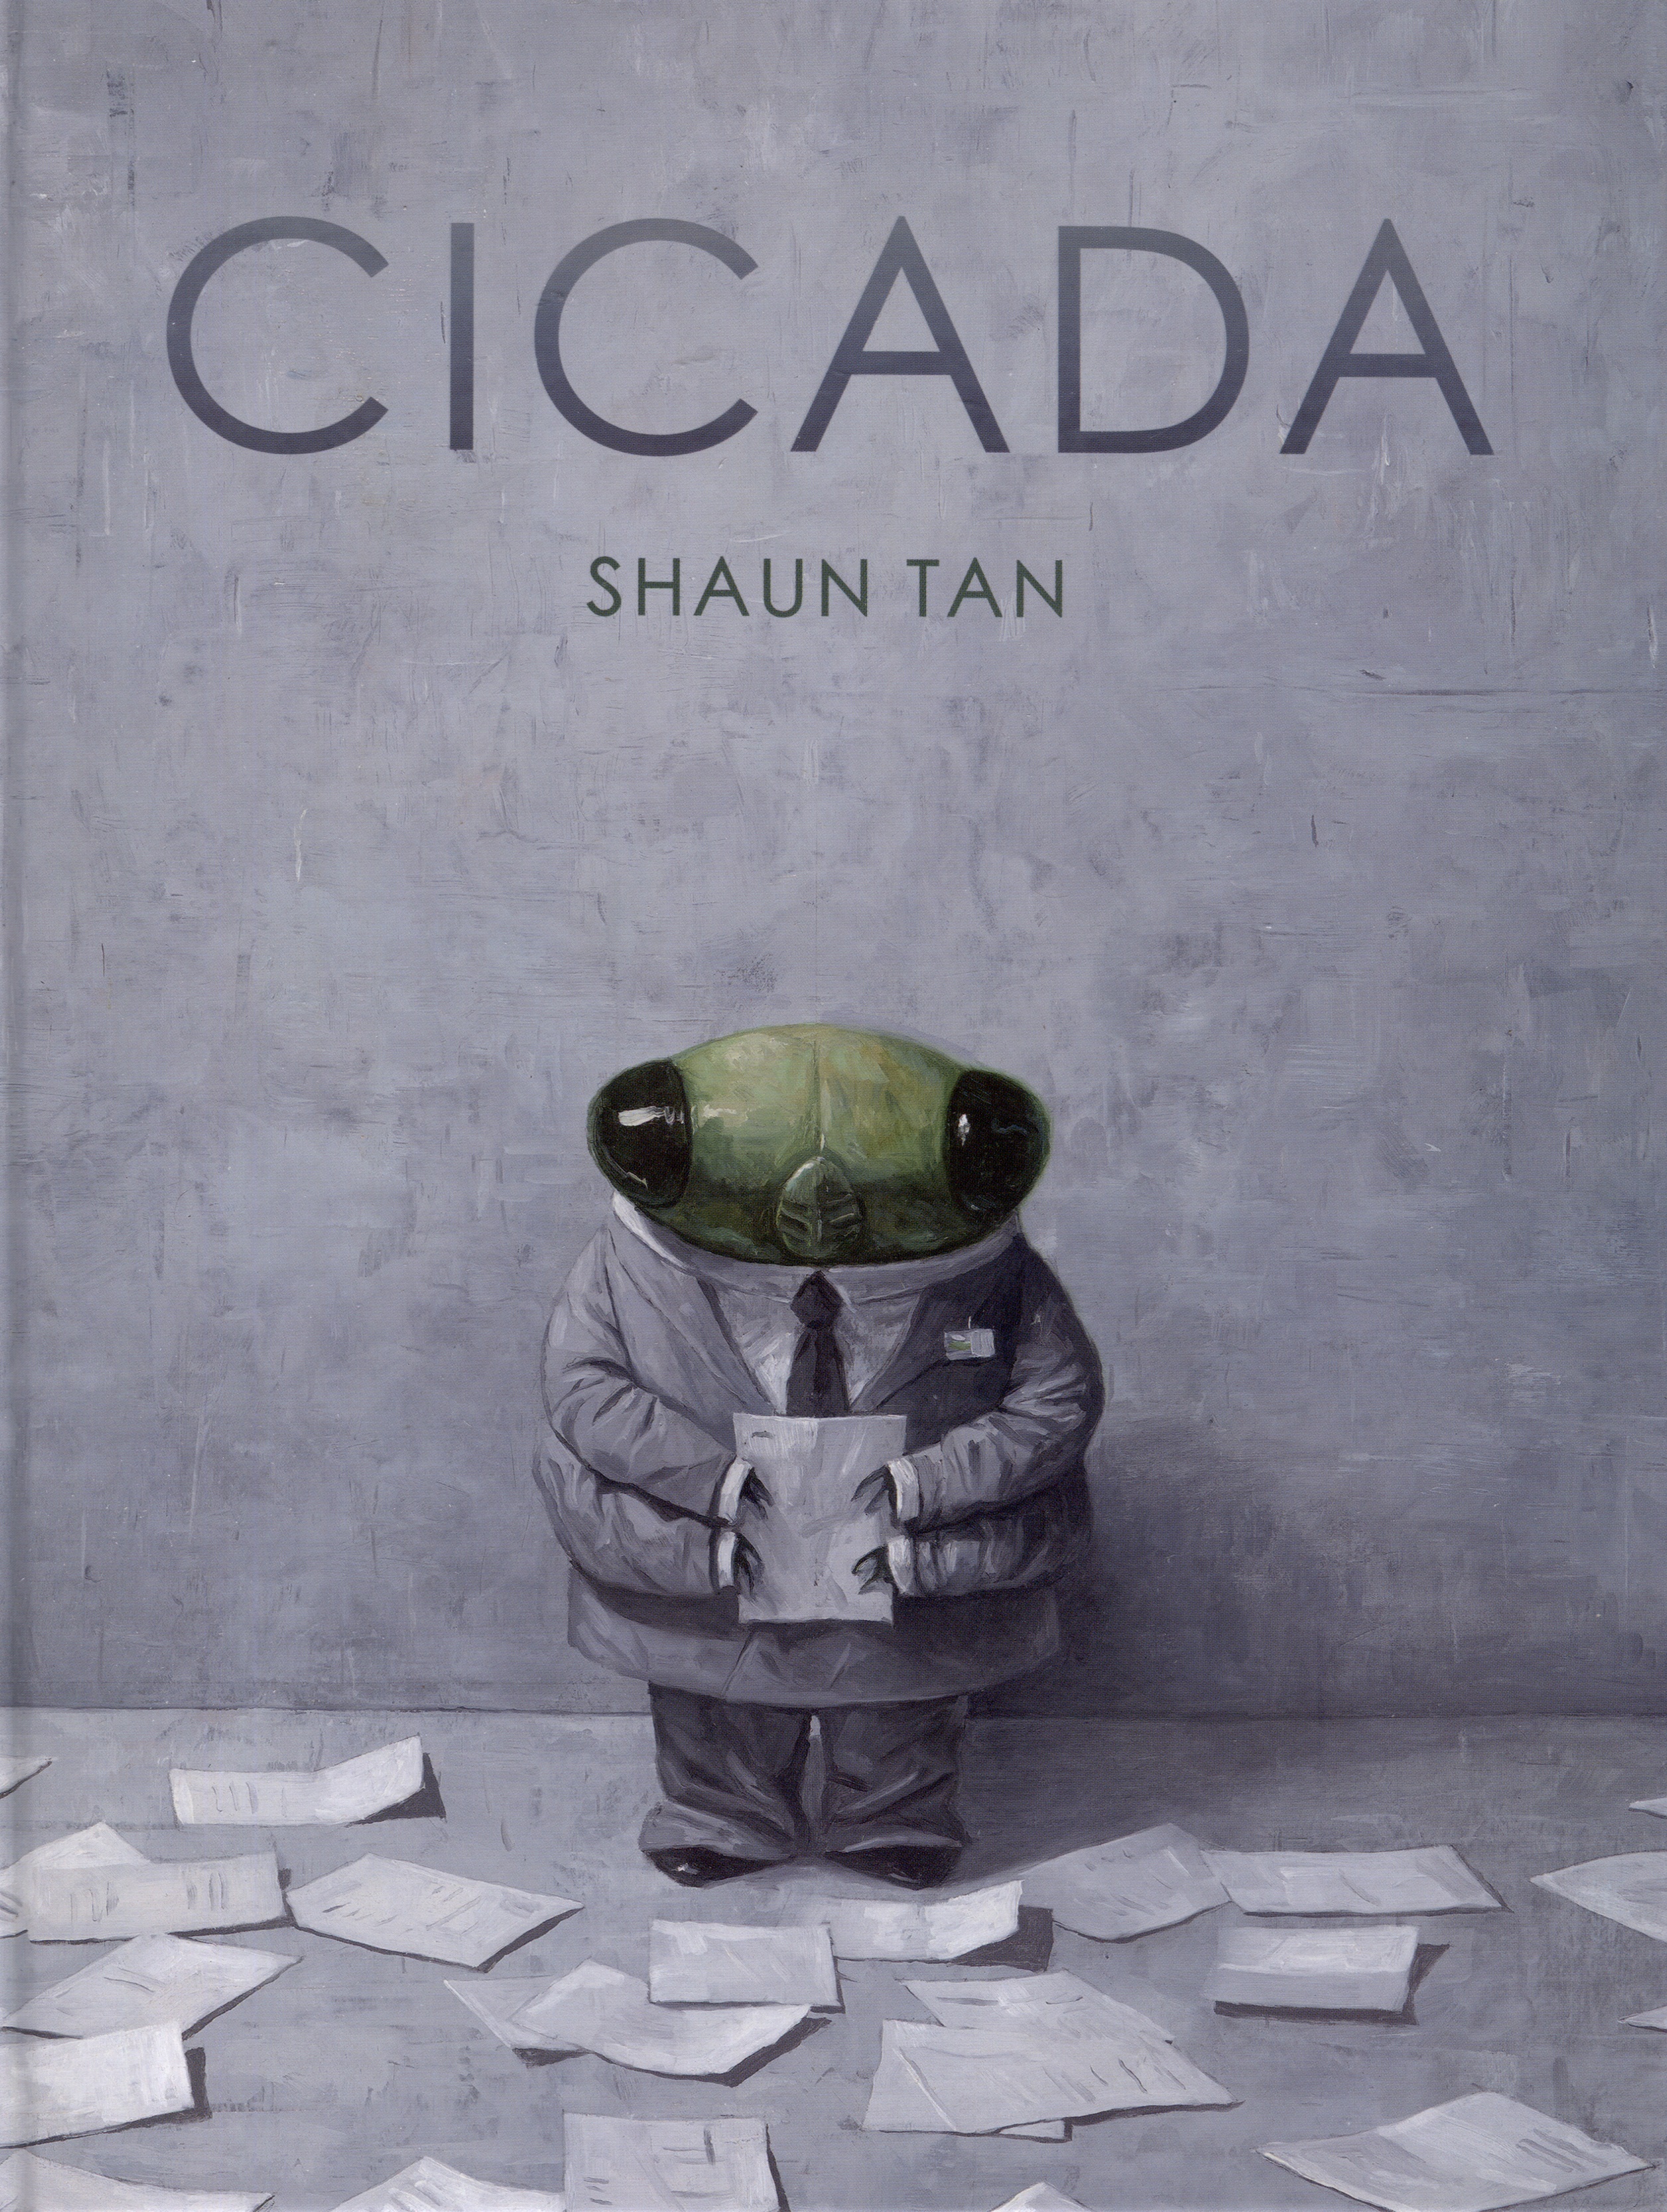 Cicada (Shaun Tan)